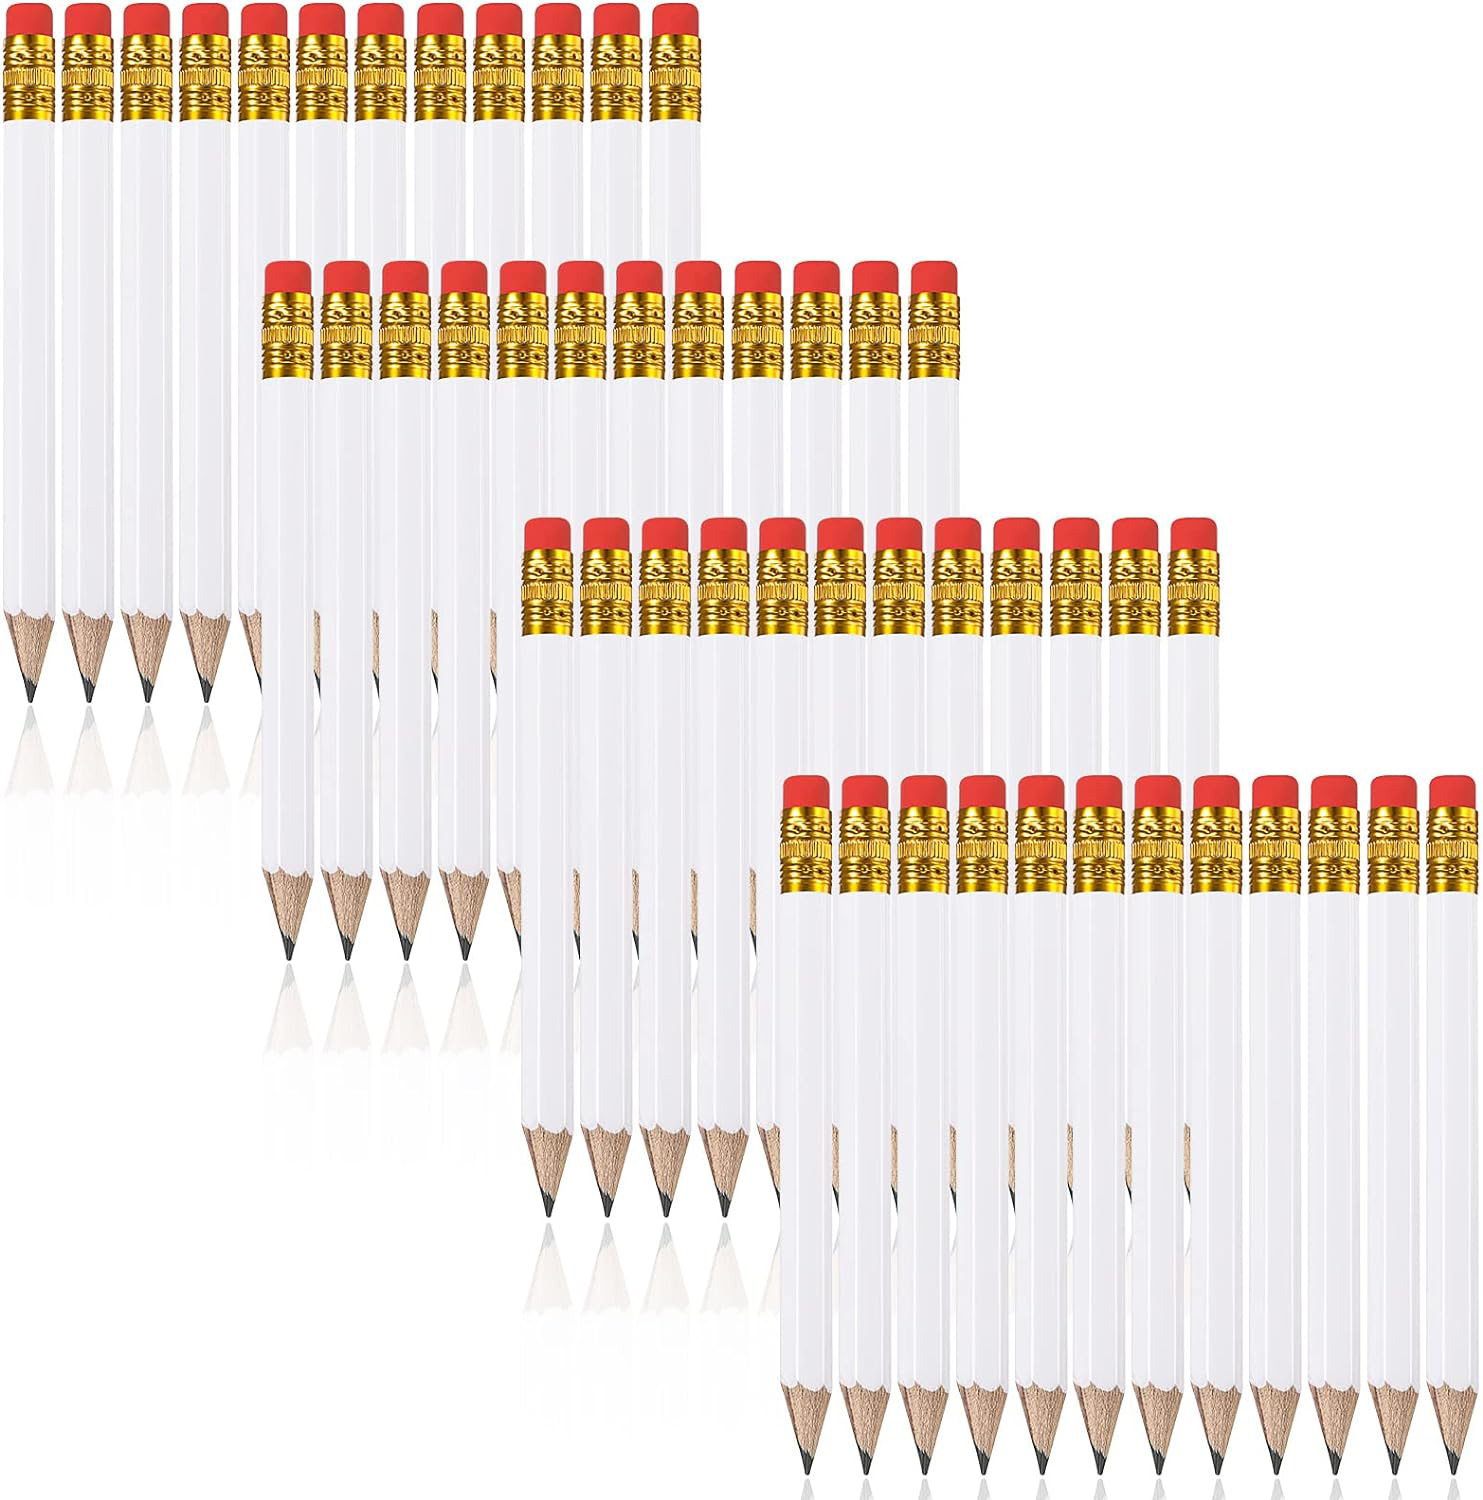 48 Pieces Golf Pencils Half Pencils with Eraser Wedding Mini Pencils Short Small